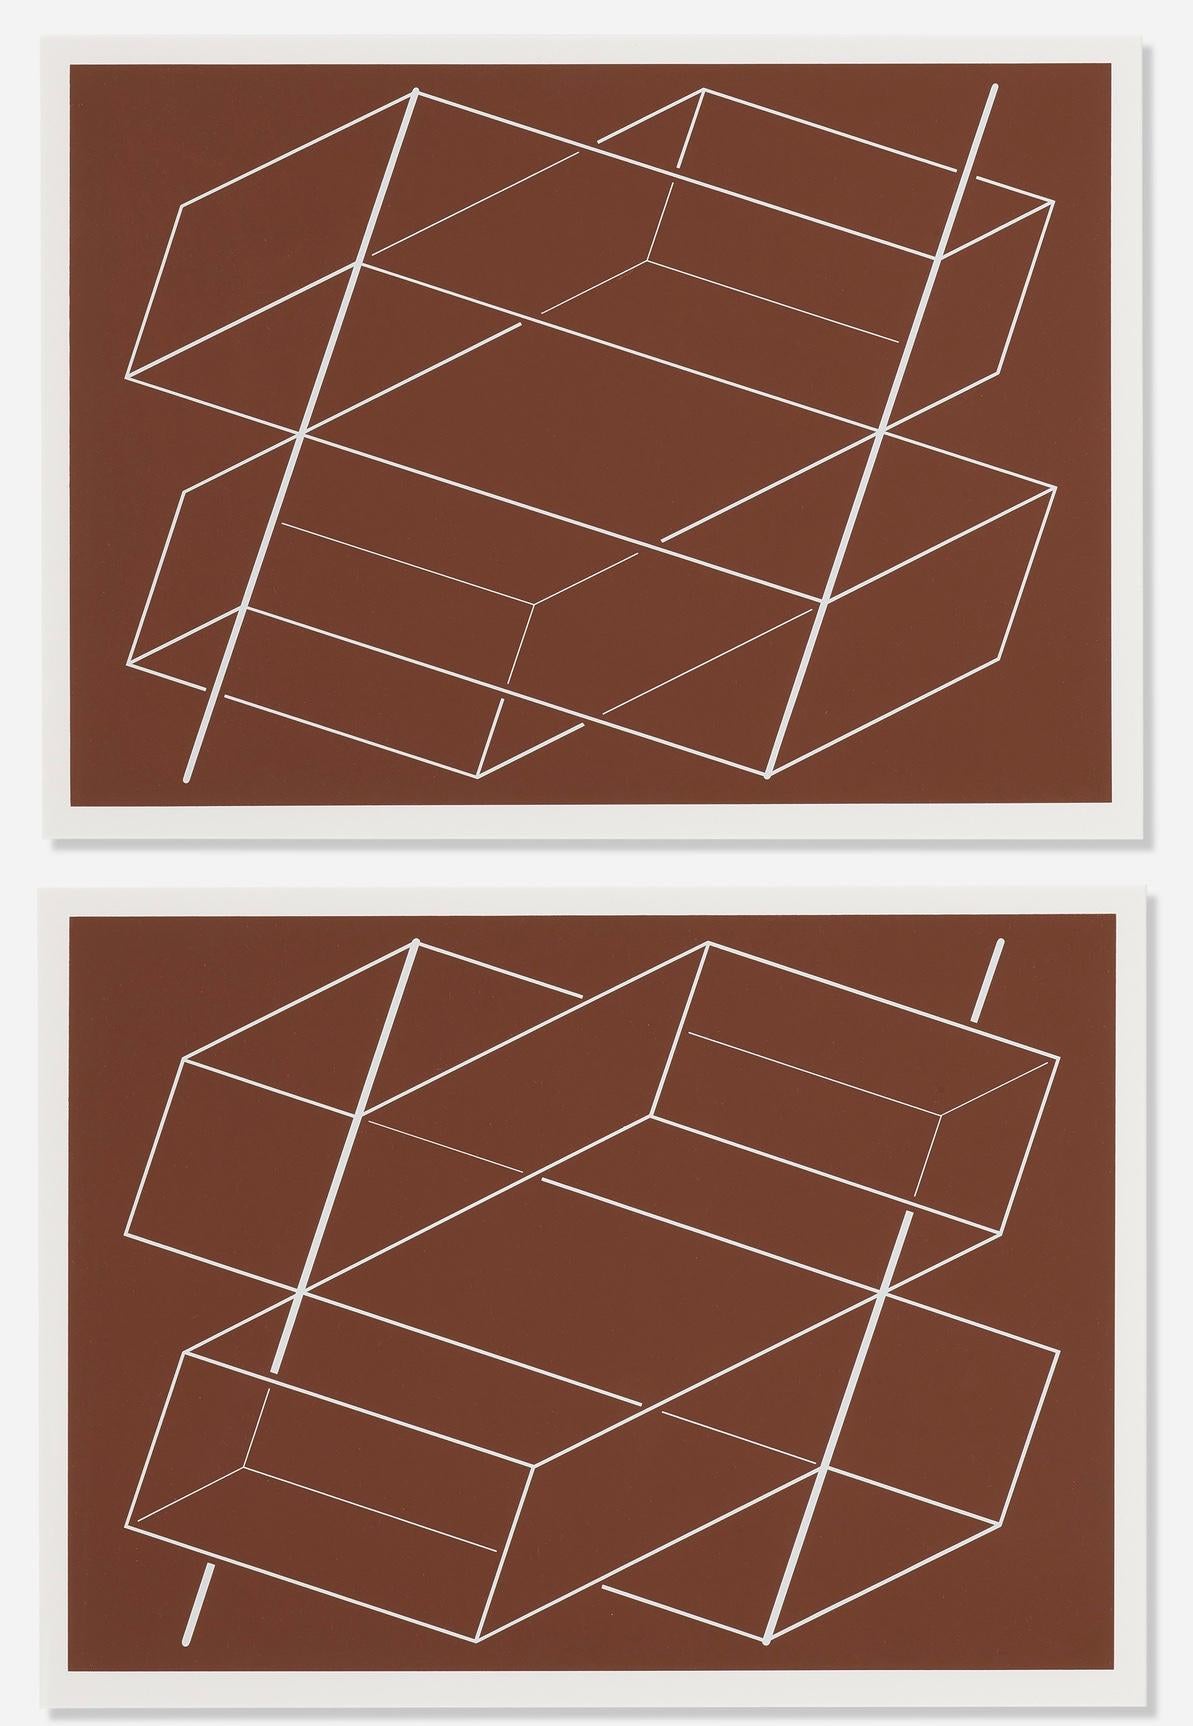 Josef Albers Abstract Print – Formelung der Artikulation: PI-F3